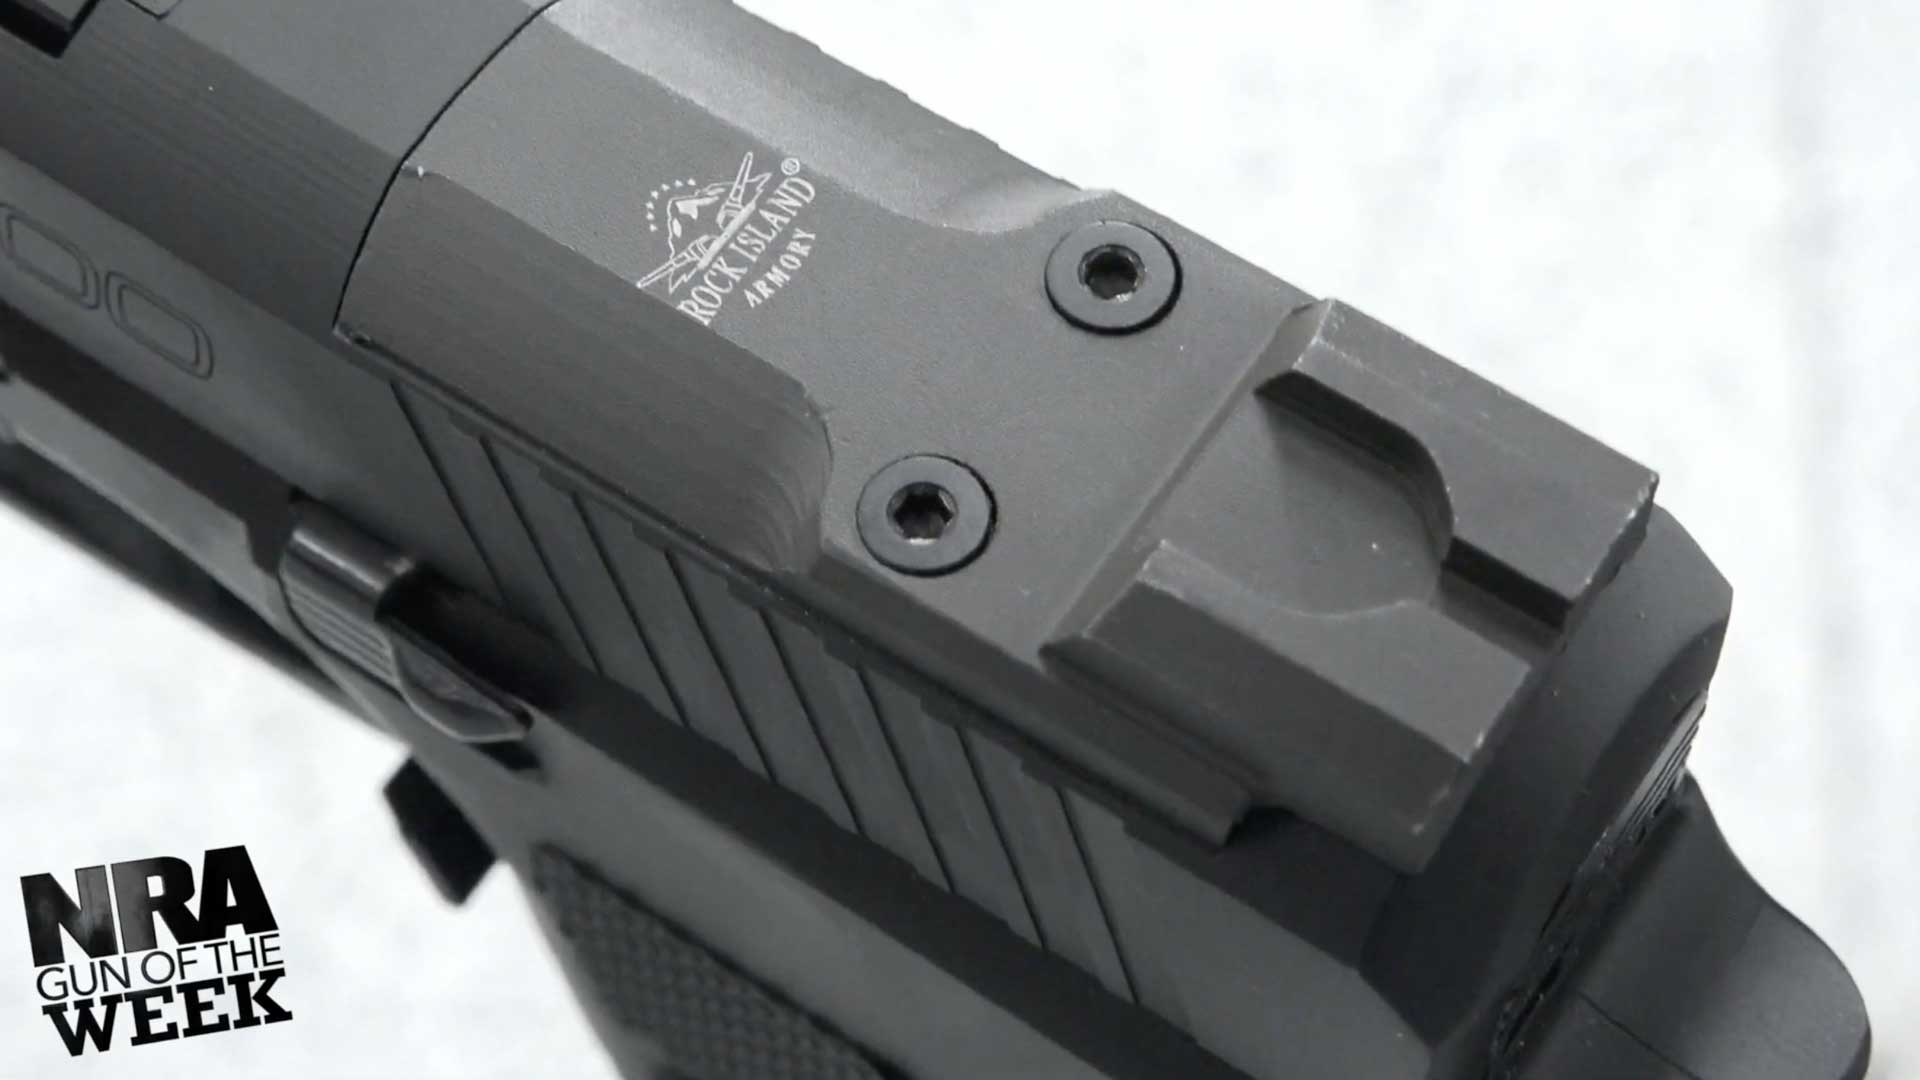 handgun pistol gun metal parts slide optic plate rear sight with text on image noting "NRA GUN OF THE WEEK"